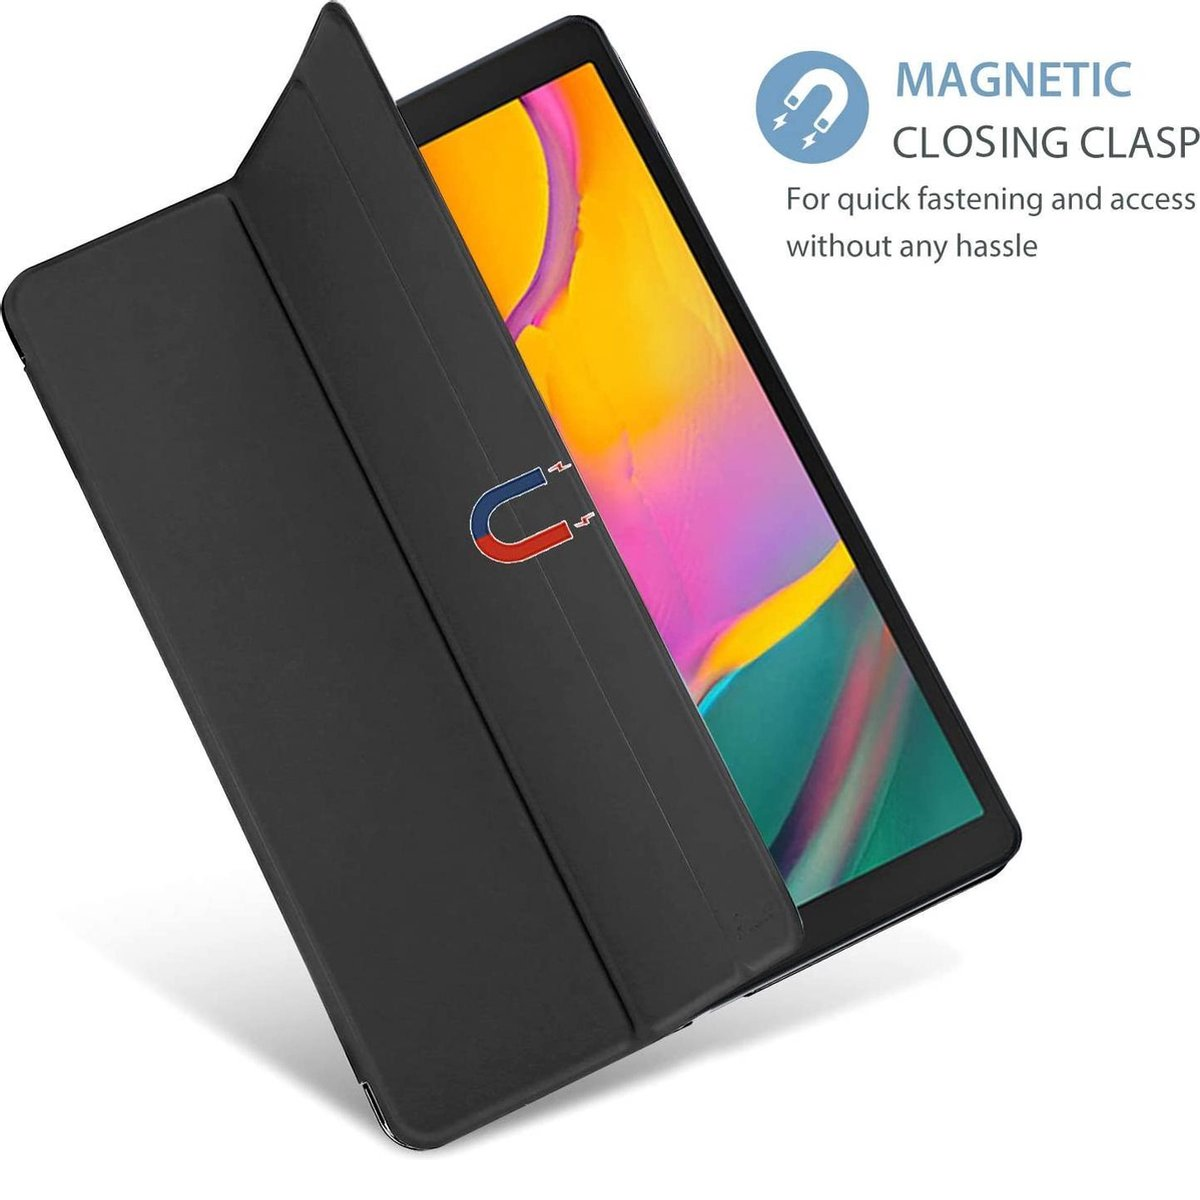 Hoesje geschikt voor Samsung Galaxy Tab S4 10.5 Book Cover Tri-Fold hoesje met soft silicone houder zwart